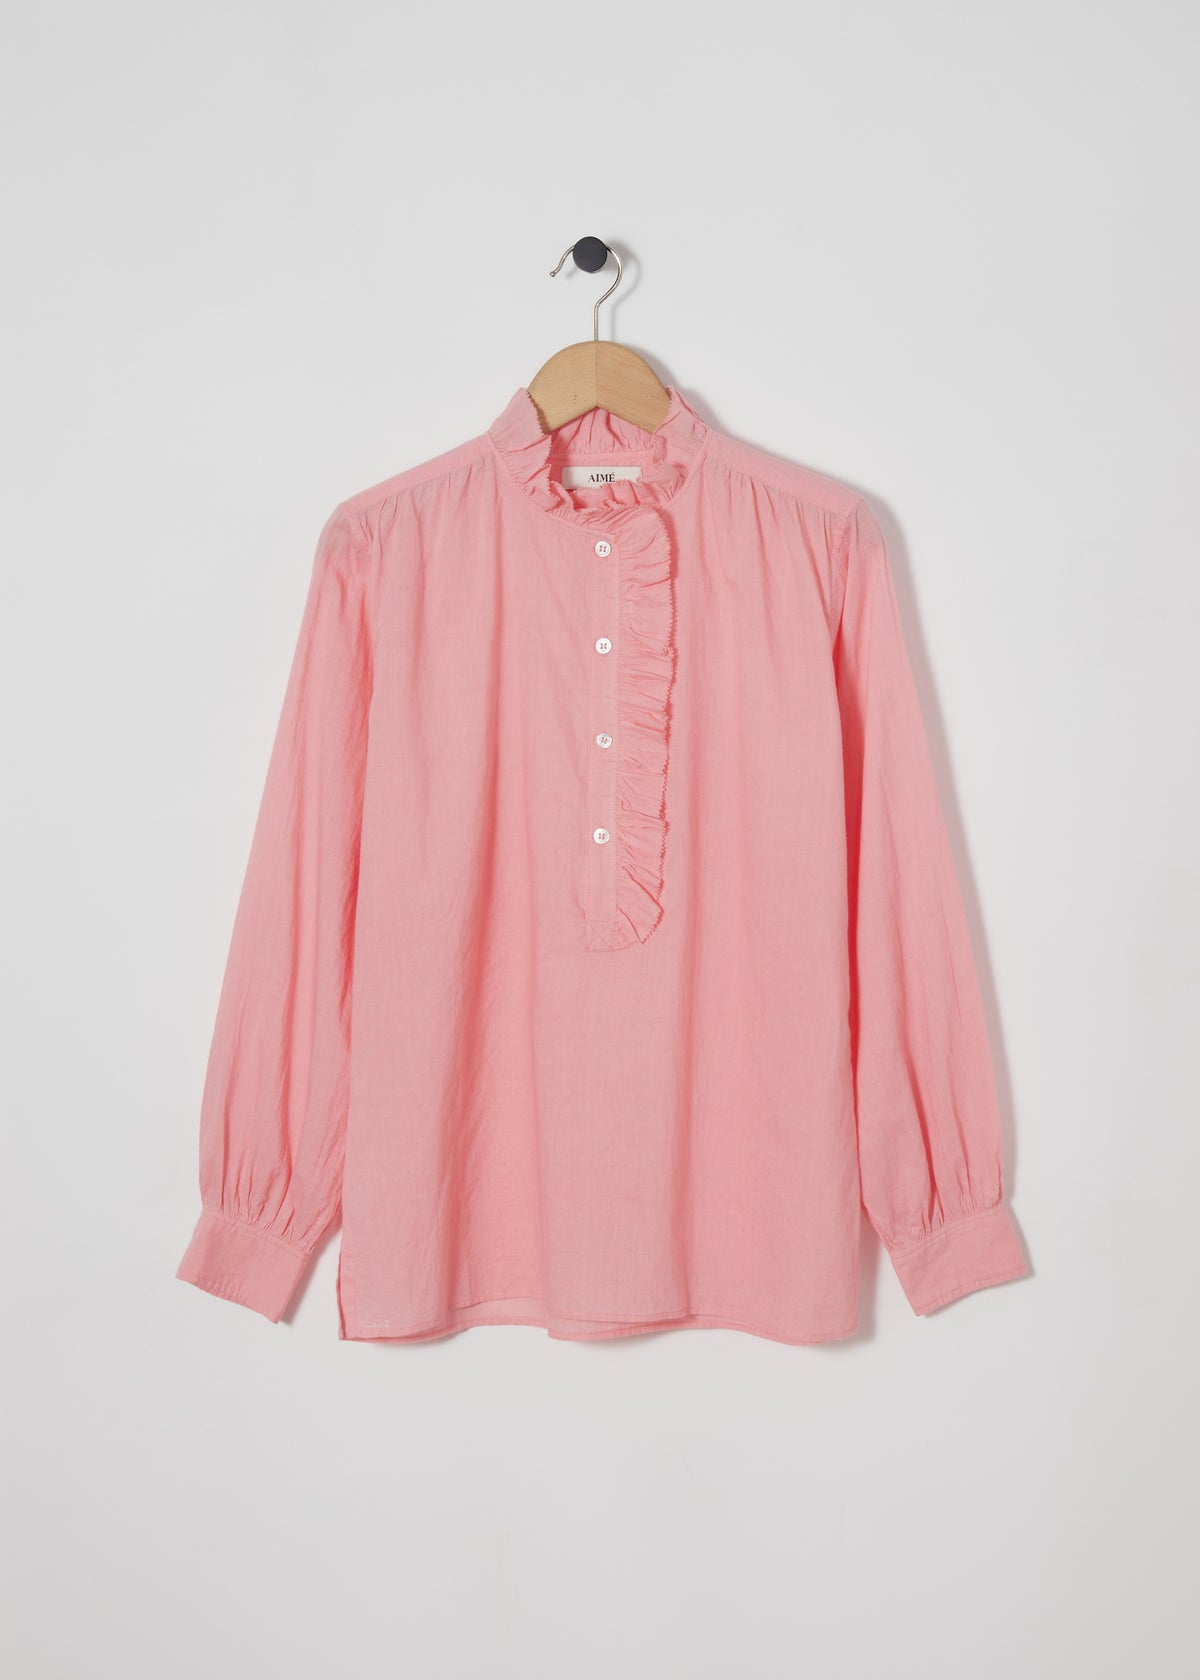 Benson Shirt, Peony Pink | Aimé London